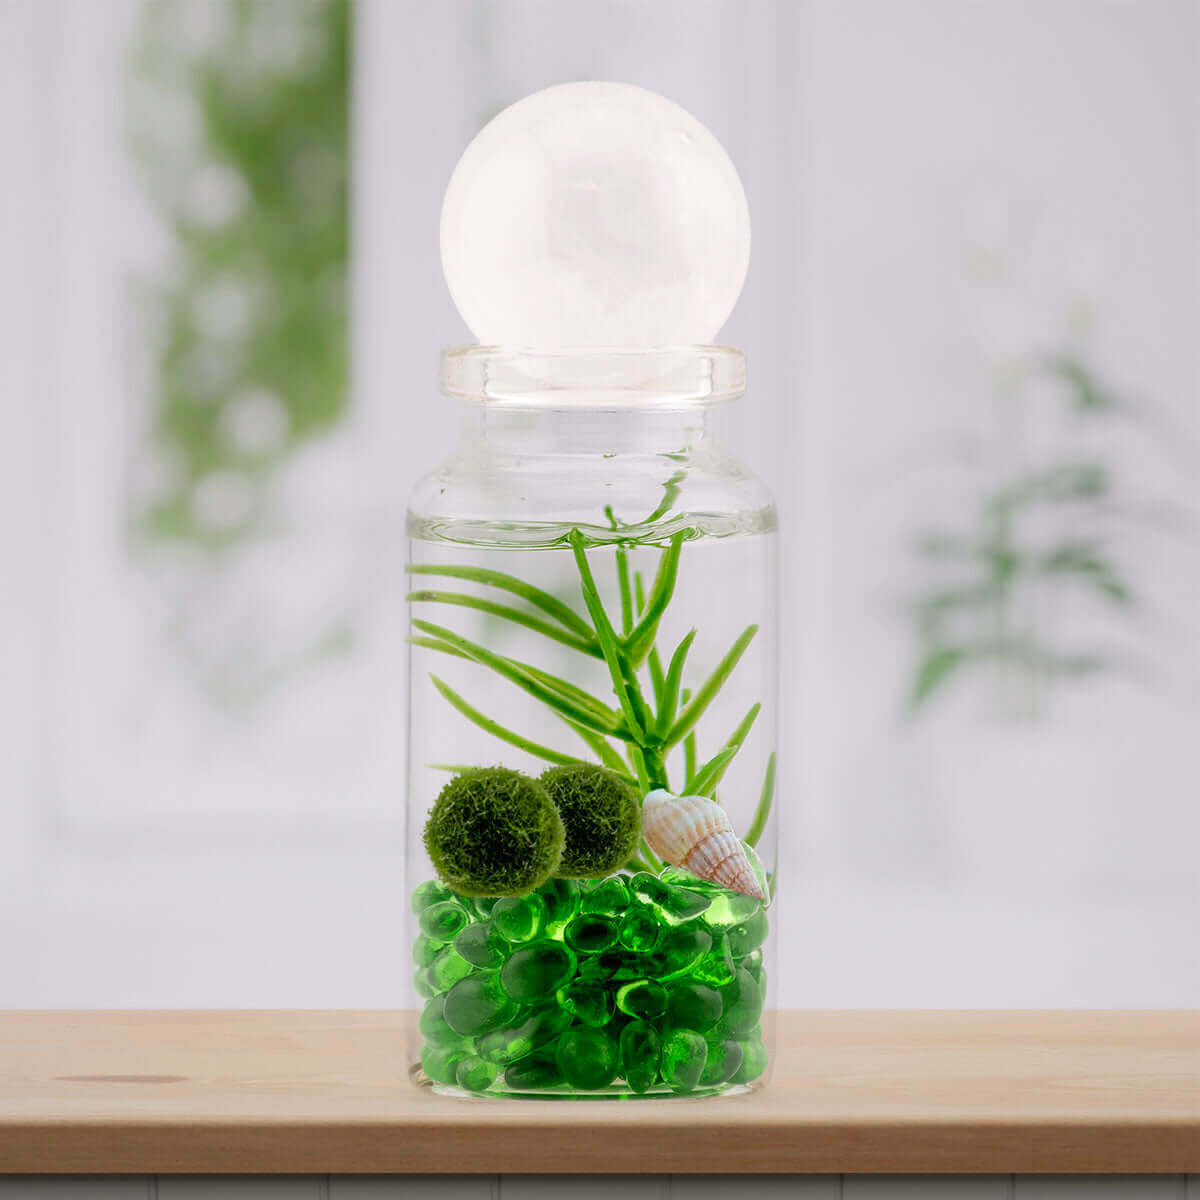 Clear Quartz Crystal sphere atop a moss ball pet terrarium, radiating natural elegance.